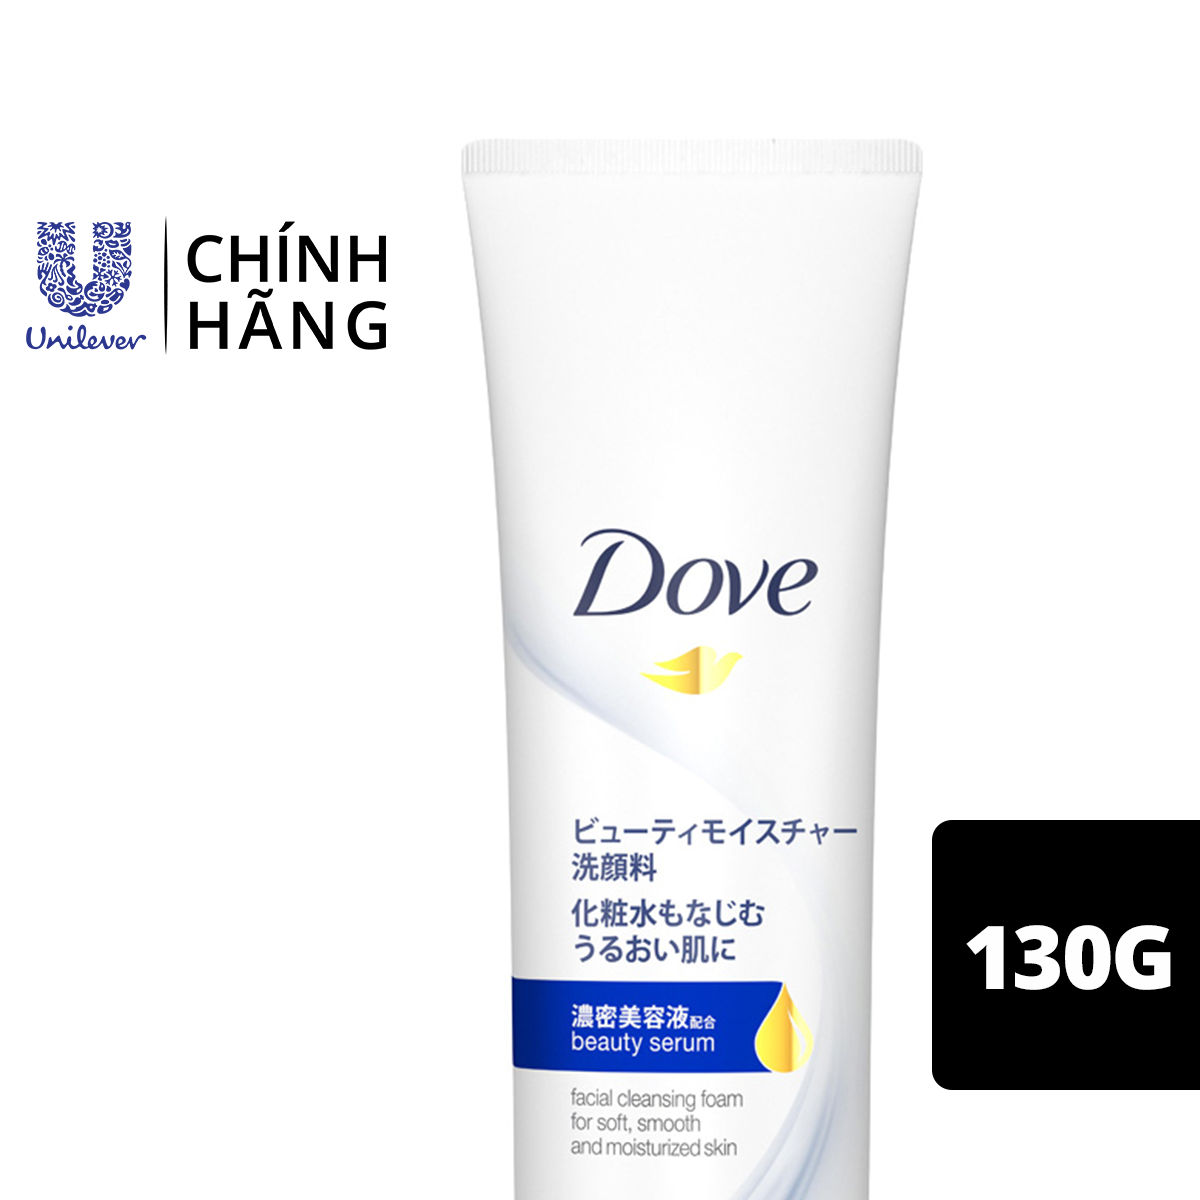 Sữa rửa mặt bọt mịn Dove serum sạch sâu tốt cho da khô - da mềm ẩm mượt 130g